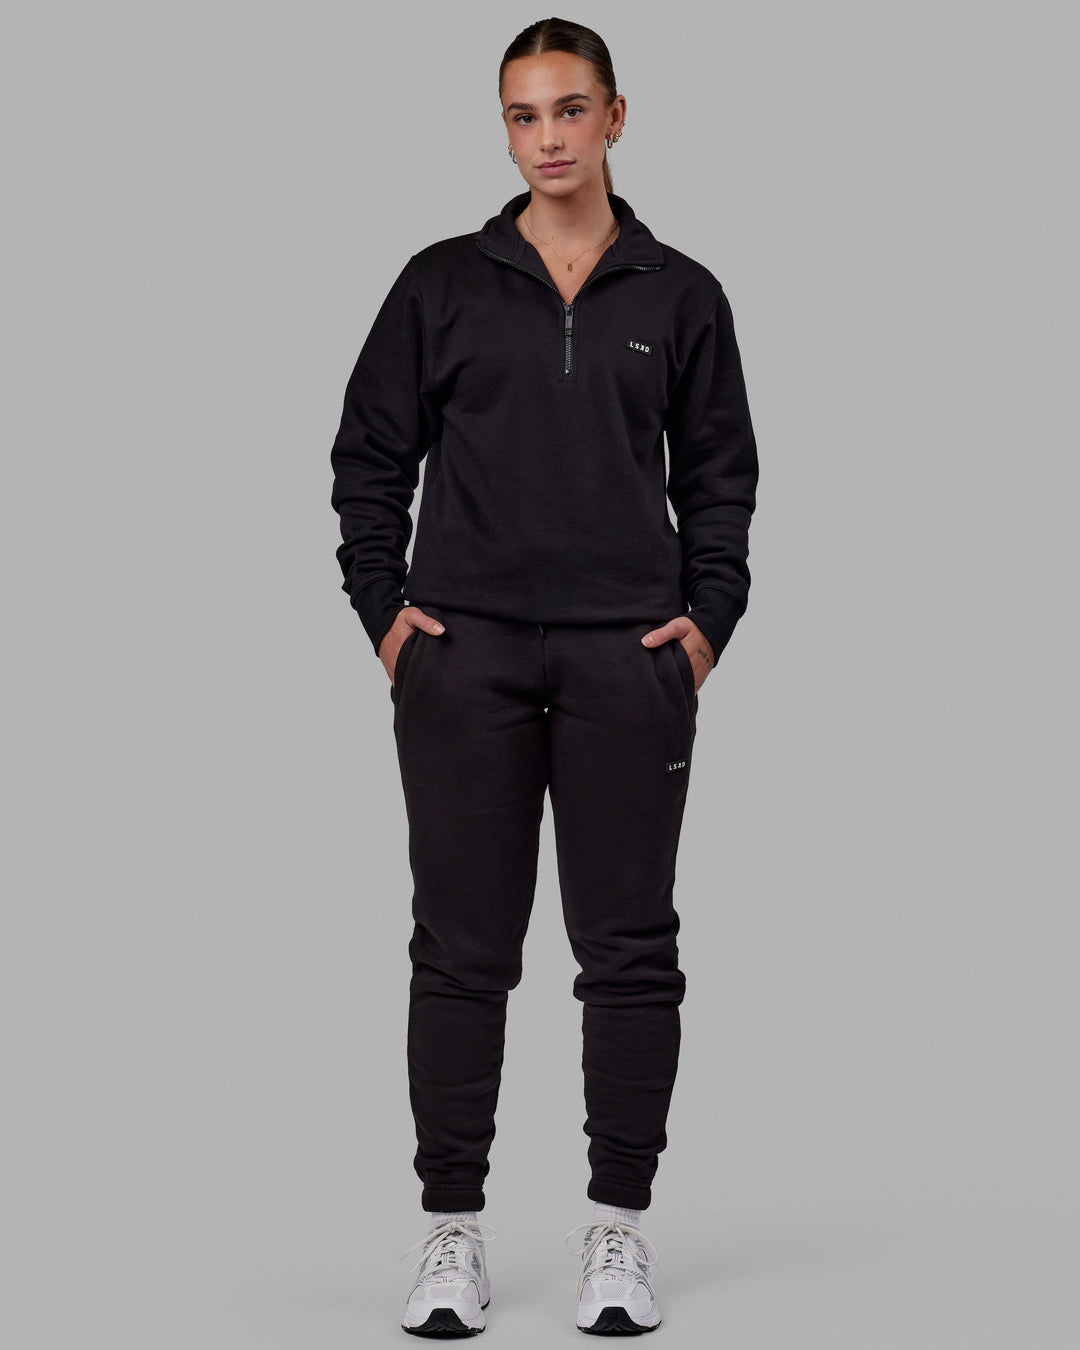 Woman wearing Unisex Fundamental 1/4 Zip Sweater - Black